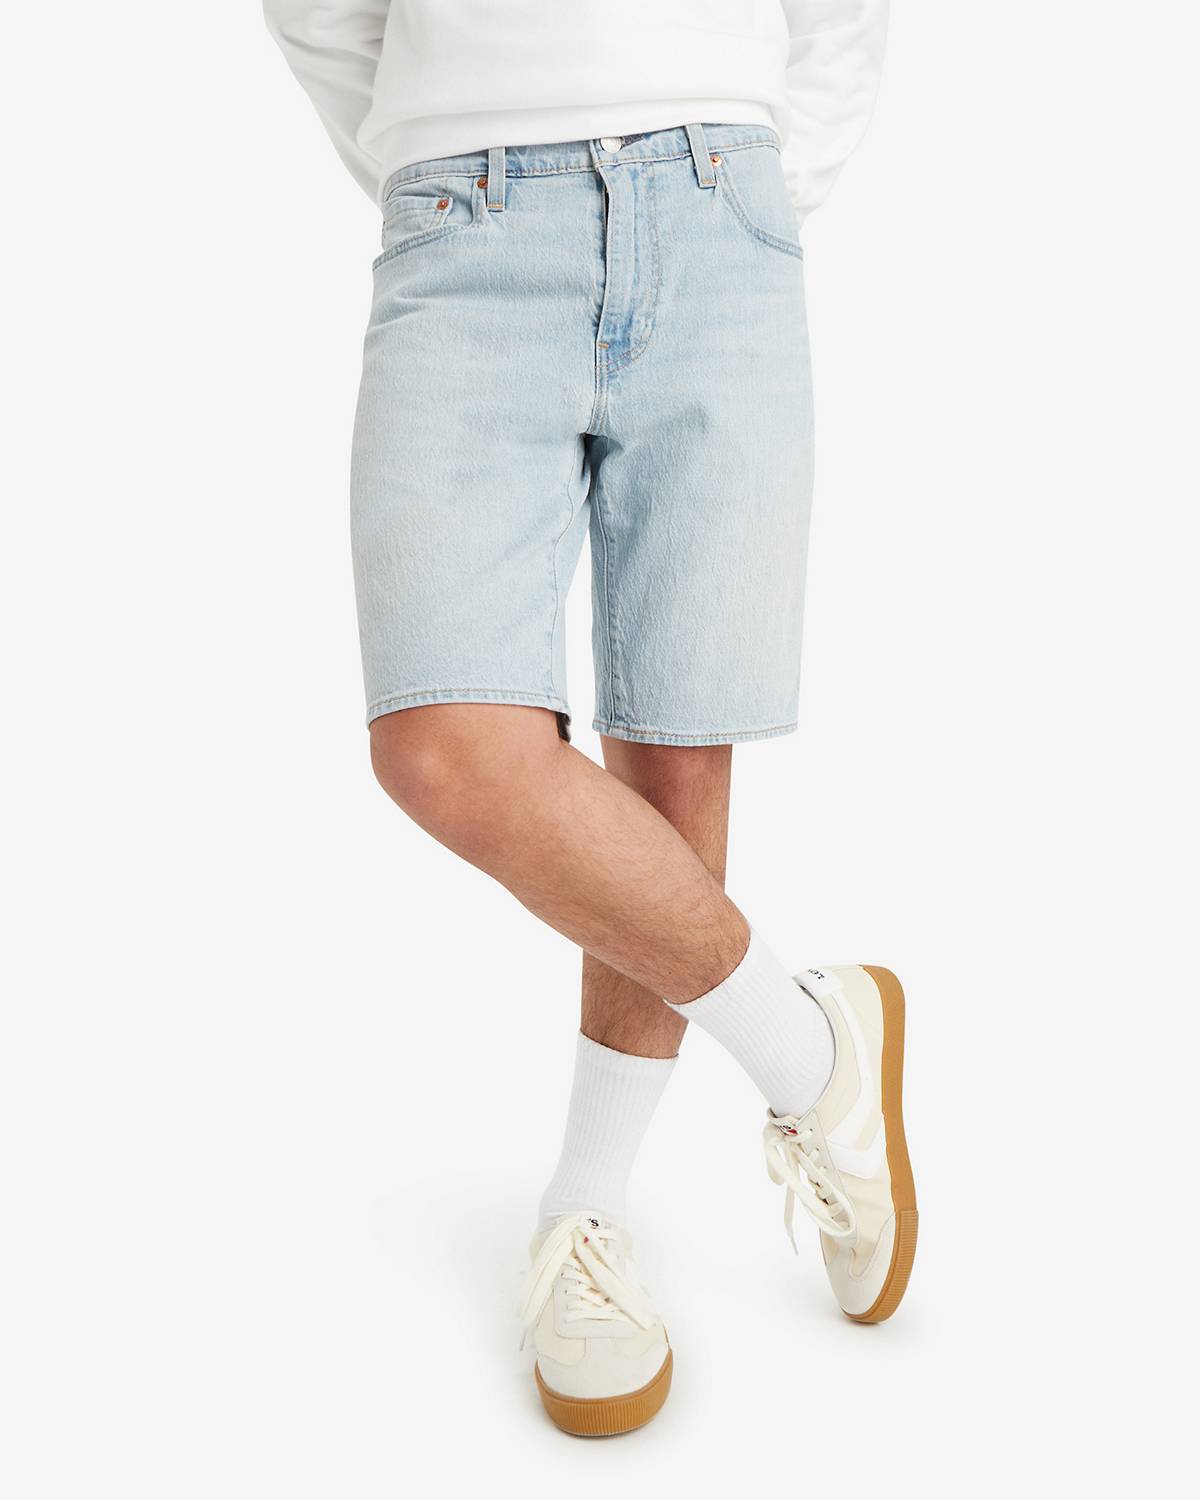 Men's Baggy Shorts: Shop Loose Fit Shorts